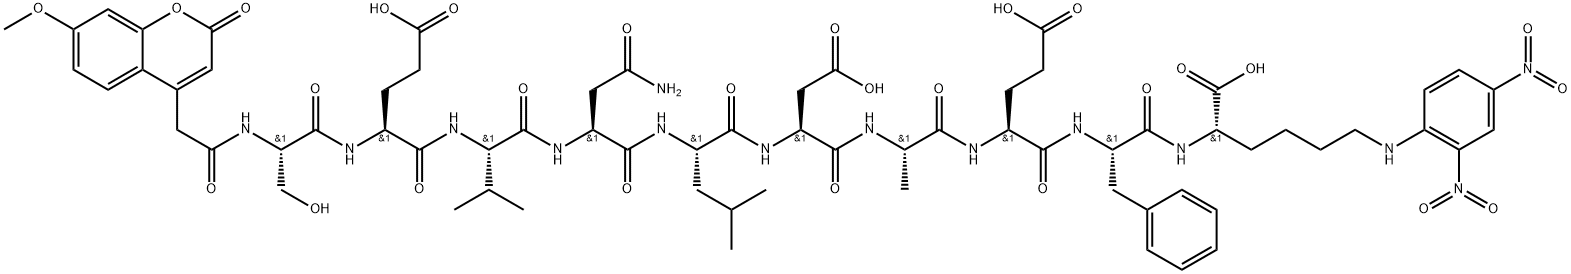 Mca-(Asn670,Leu671)-Amyloid β/A4 Protein Precursor770(667-675)-Lys(Dnp) ammonium acetate salt|Mca-(Asn670,Leu671)-Amyloid β/A4 Protein Precursor770(667-675)-Lys(Dnp) ammonium acetate salt